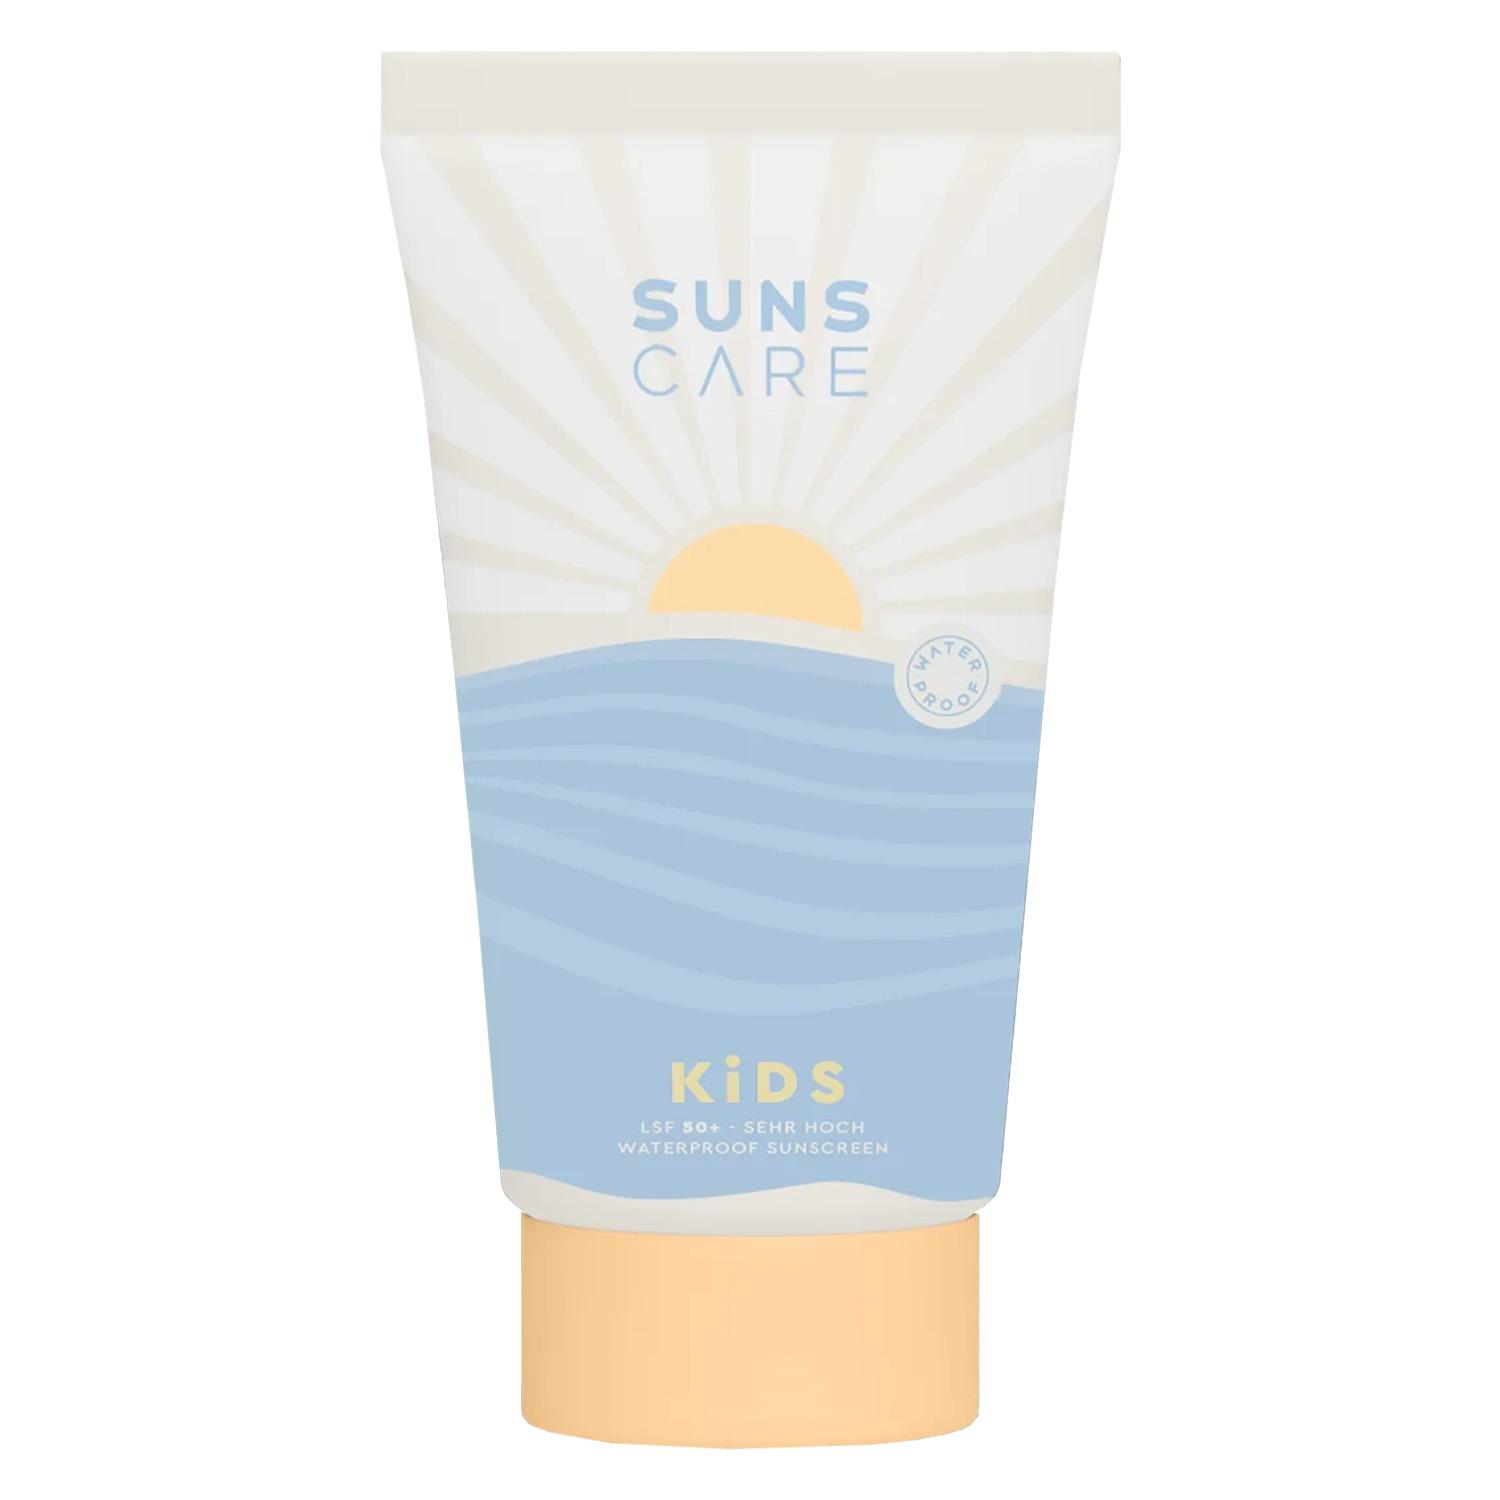 SUNS CARE - Suns Kids SPF50+